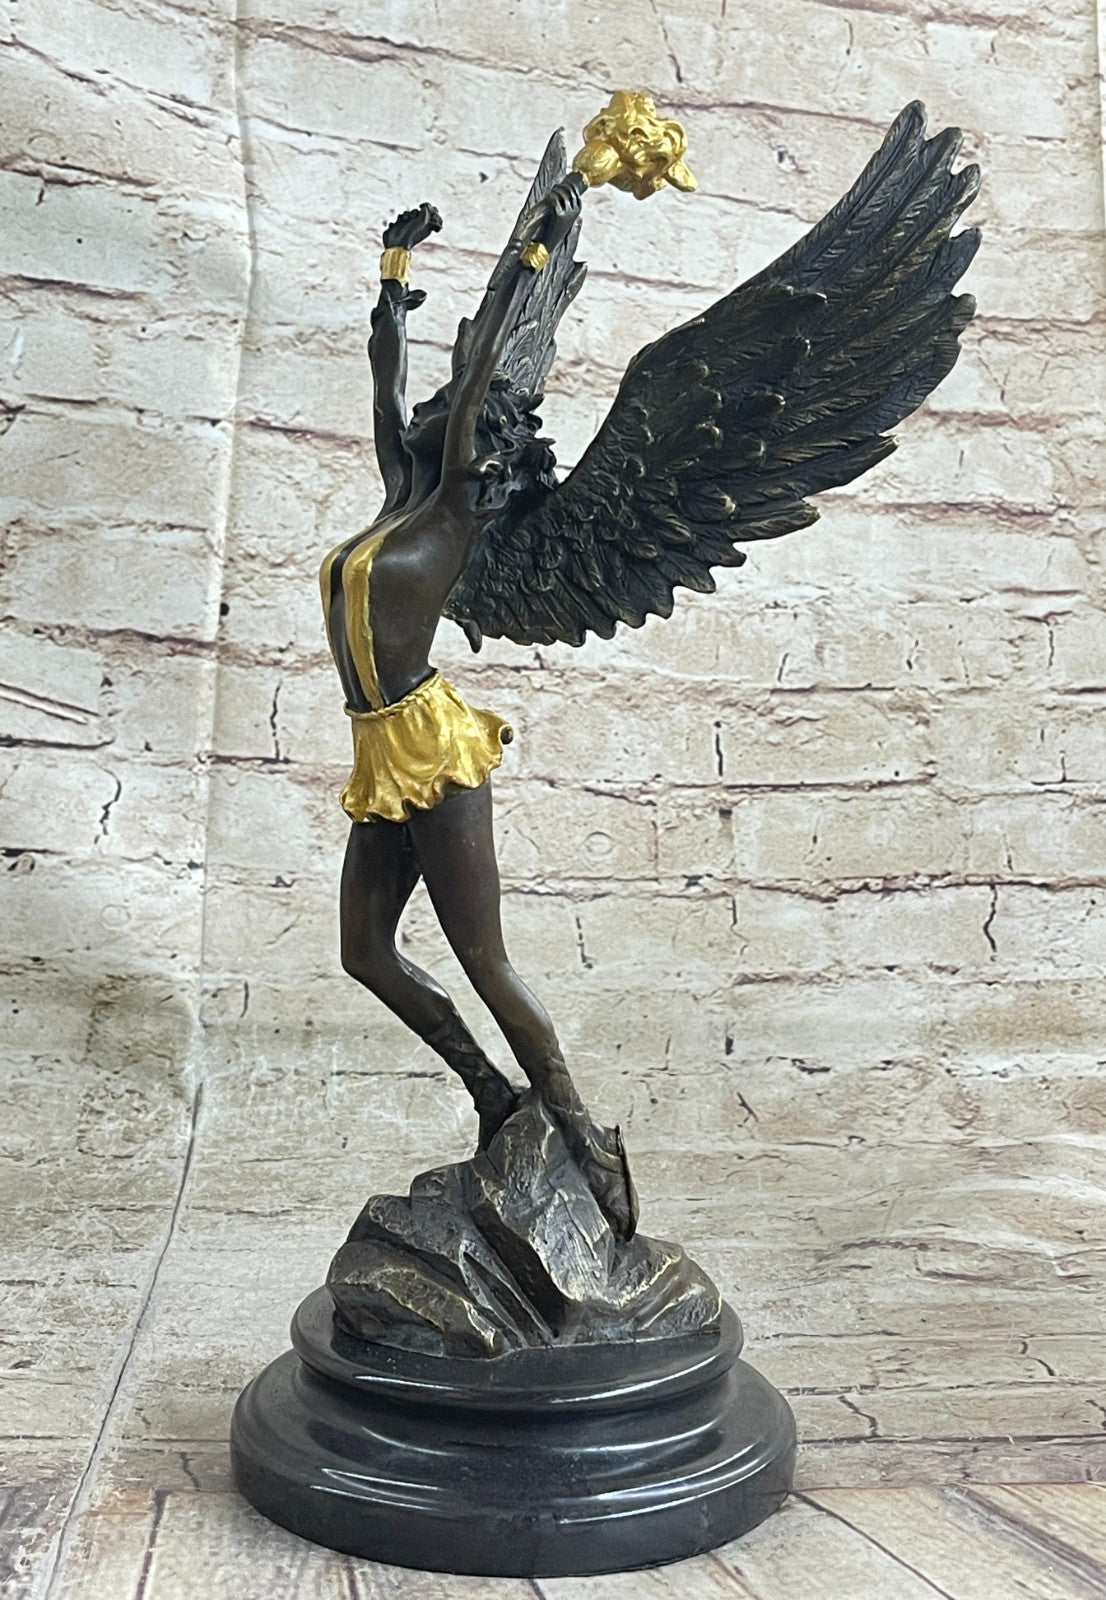 Bronze Sculpture Statue Of A Nude Female Erotic Figurine Gift Deco Collectible